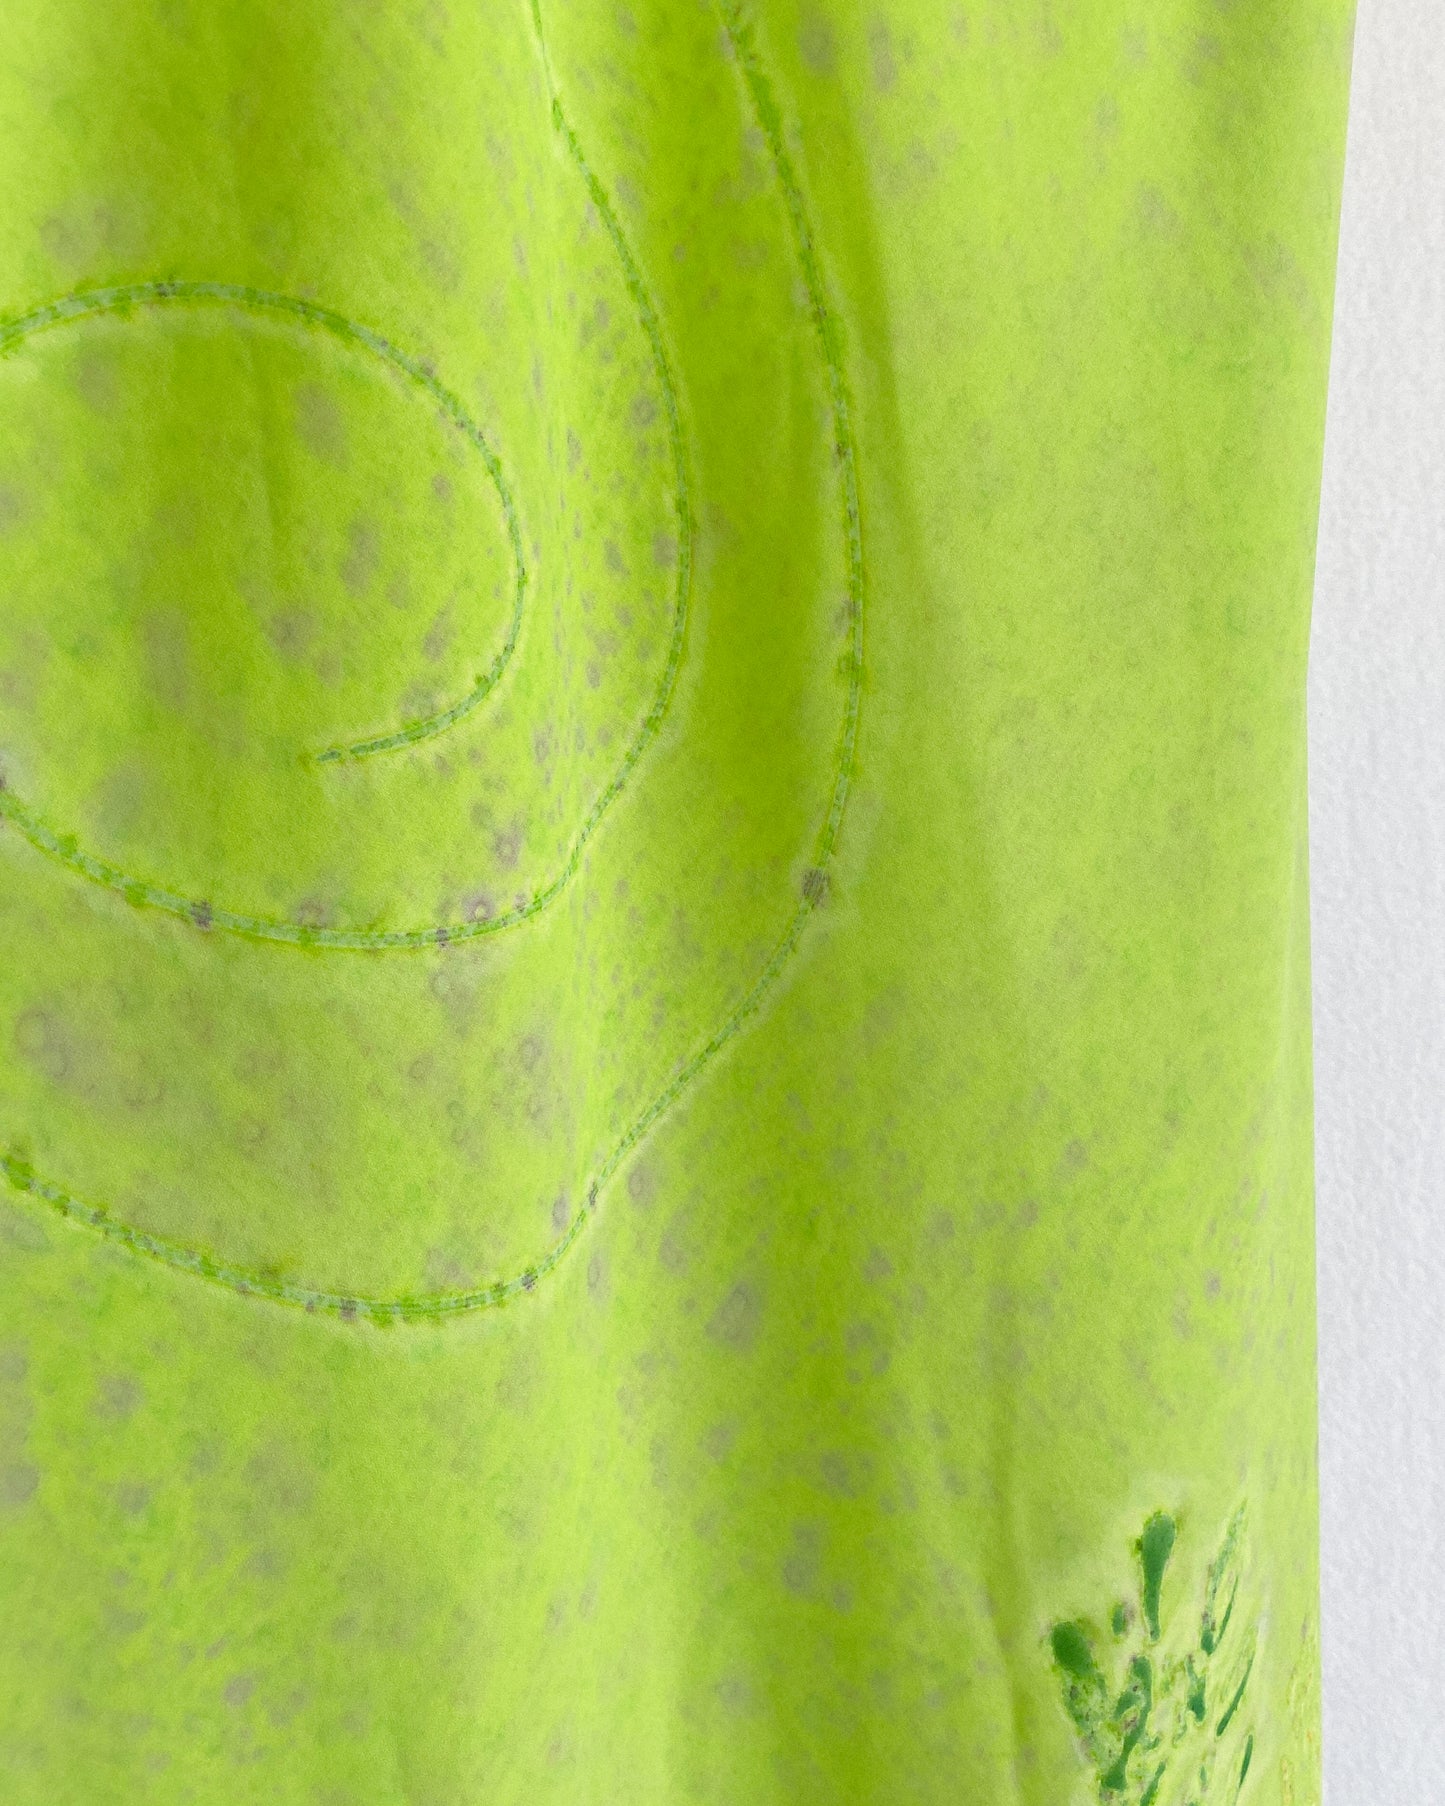 Vintage Green Chiffon Dress, Made in AUS | 10/12